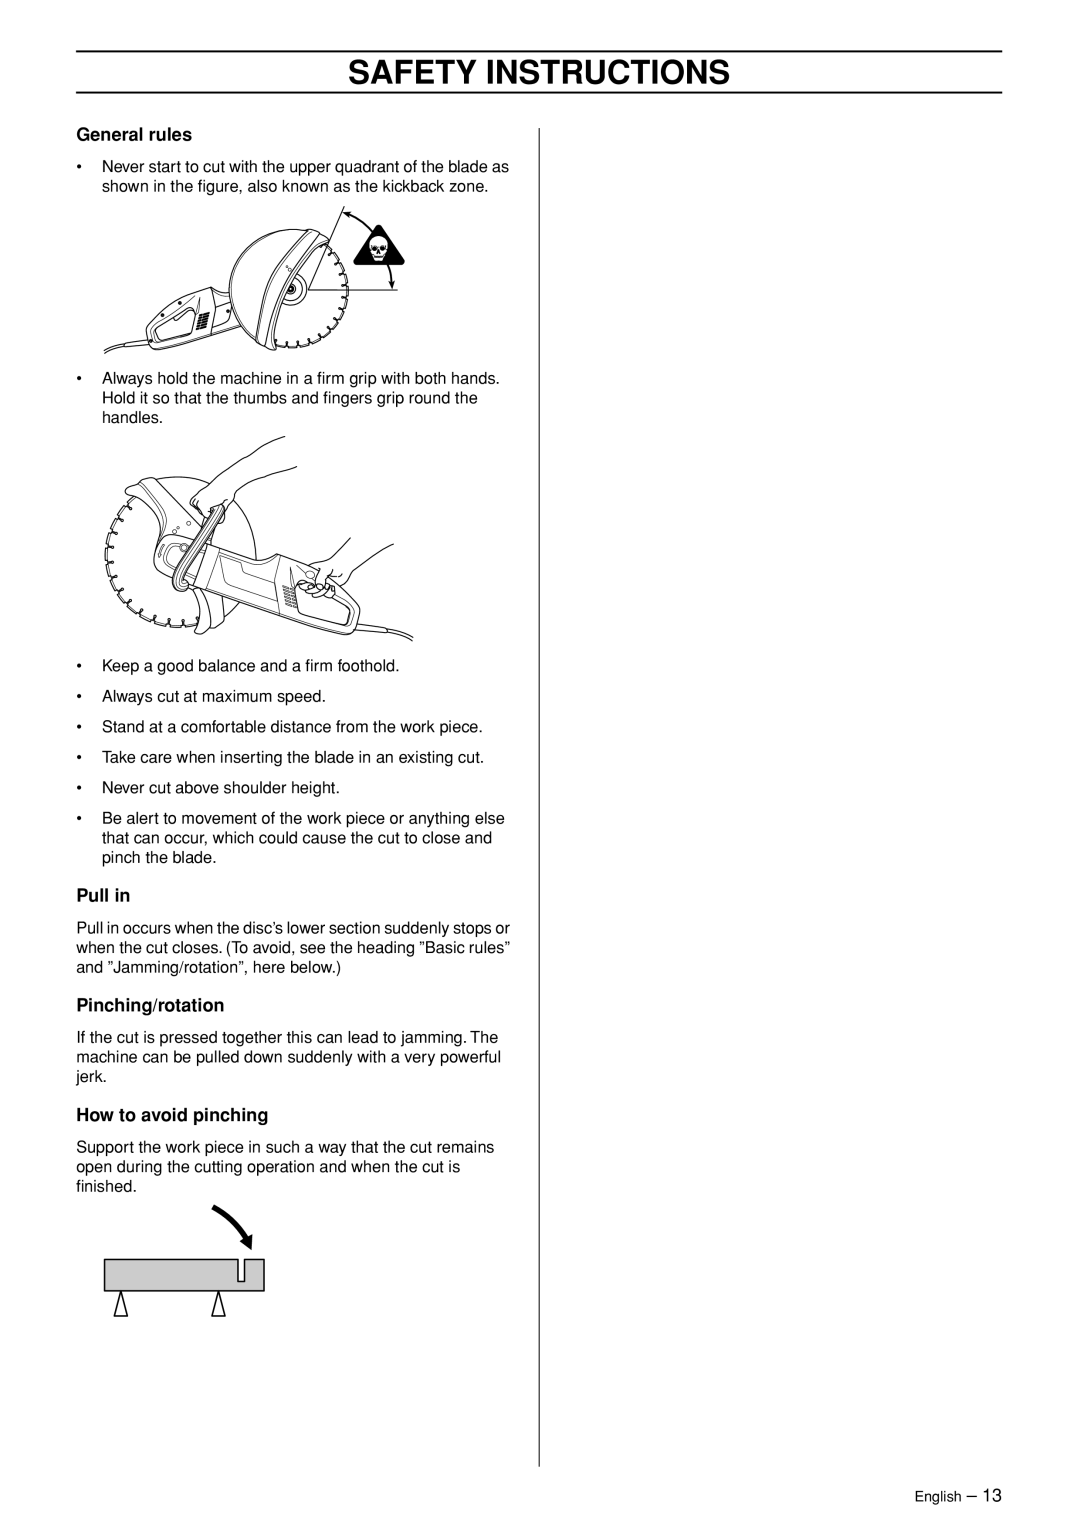 Husqvarna 1152450-26 manual General rules, Pull, Pinching/rotation, How to avoid pinching 